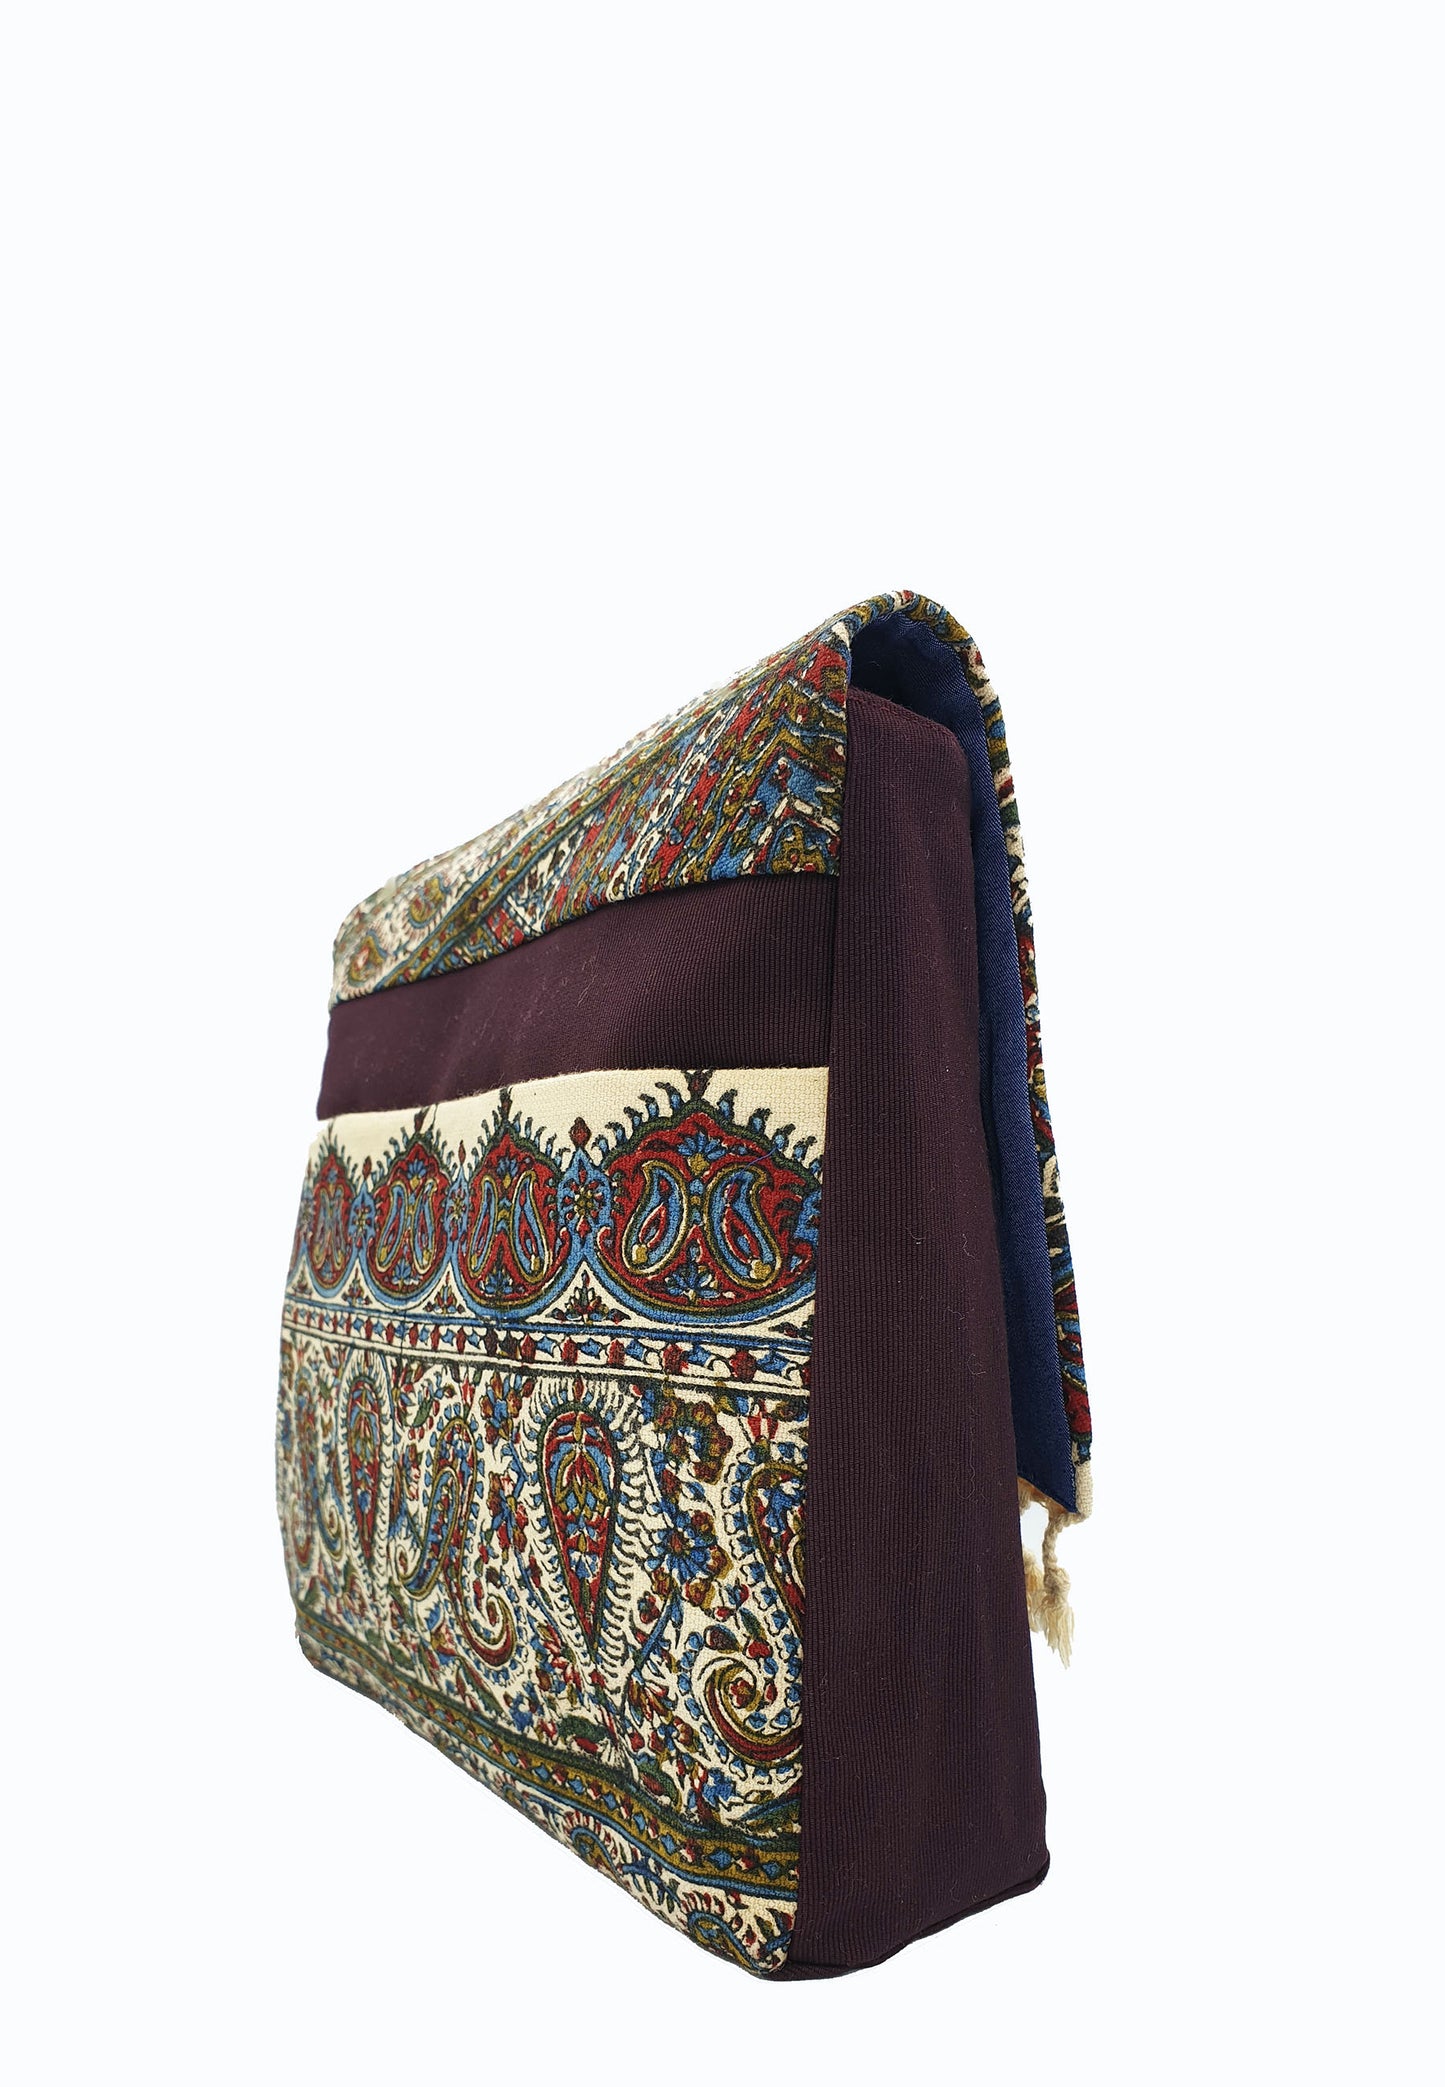 Crossbody Fabric Bag - Small in color Mahoguny-01